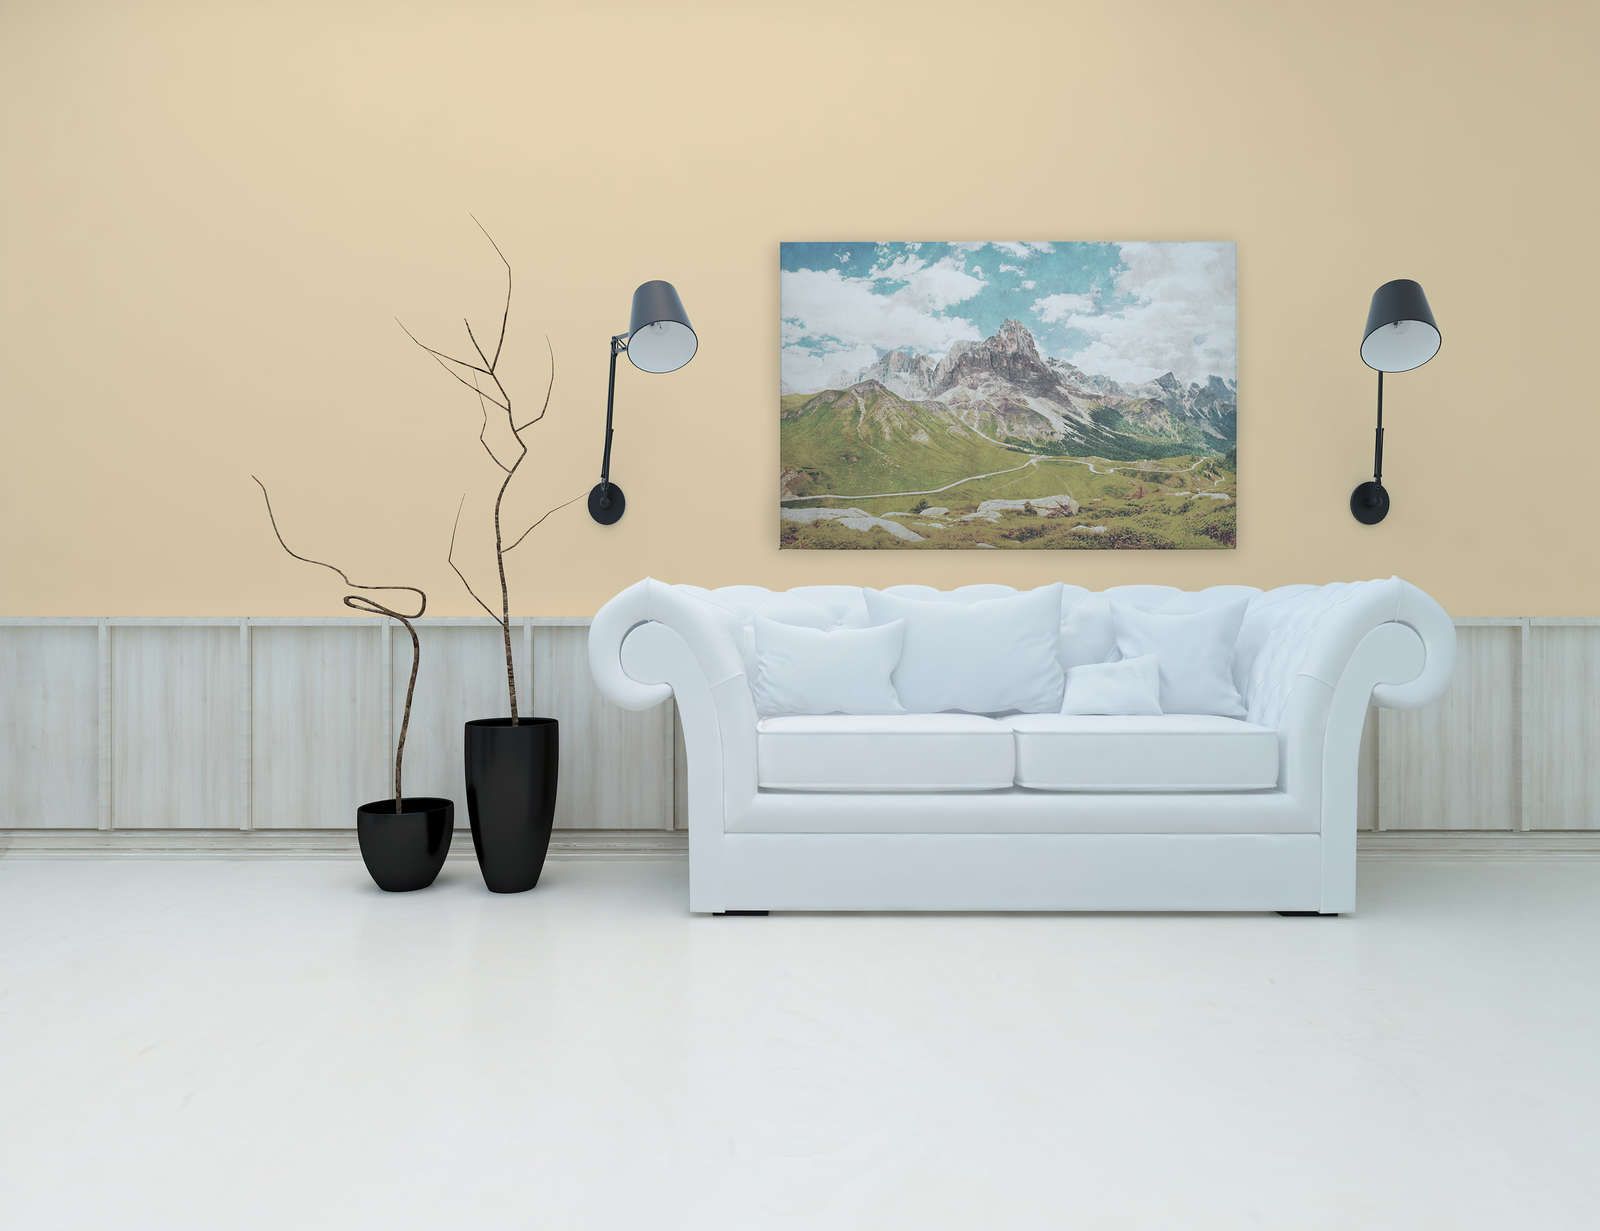             Dolomiti 2 - Canvas painting Dolomites Retro Photography - 1.20 m x 0.80 m
        